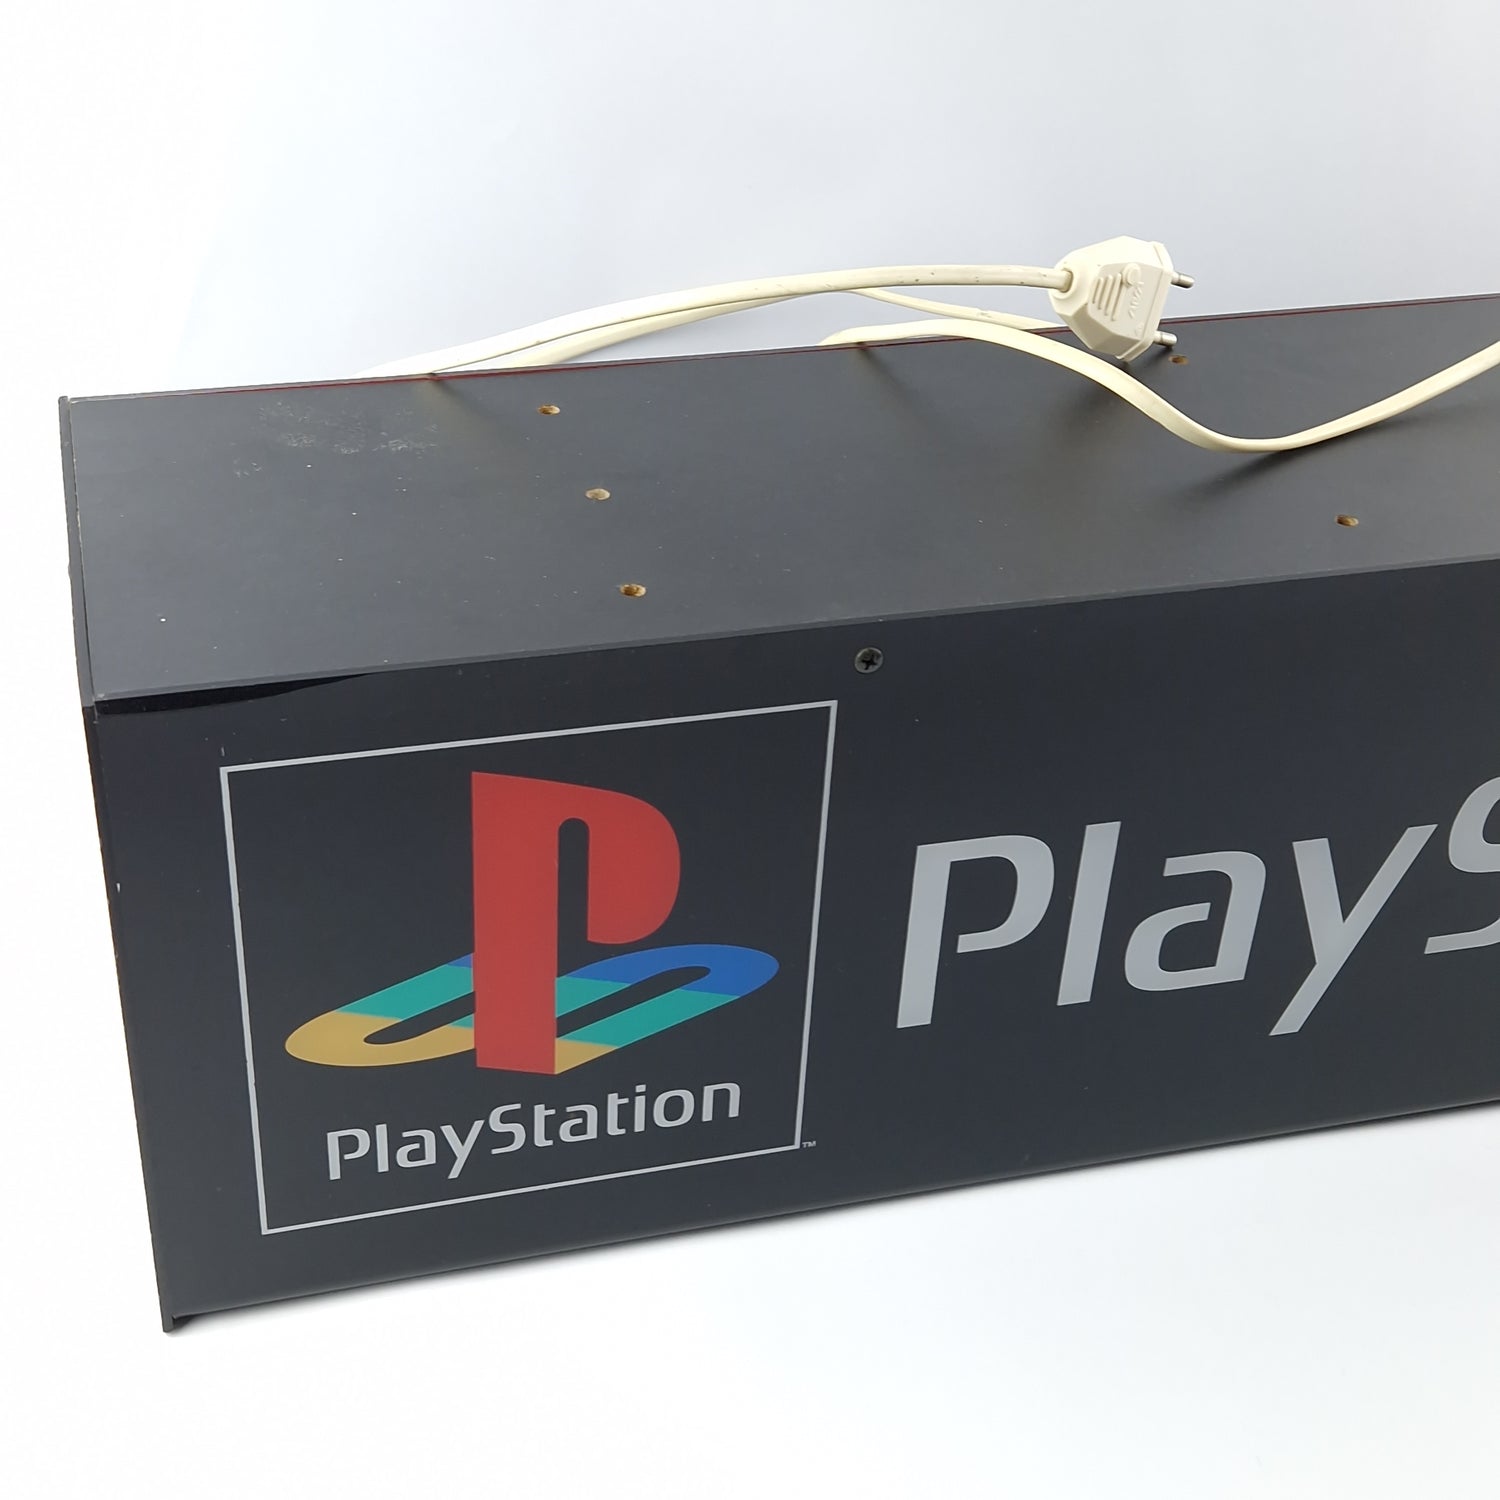 Sony Playstation 1 Leuchtreklame - PS1 PsOne Kiosk Sign Display Aufsteller